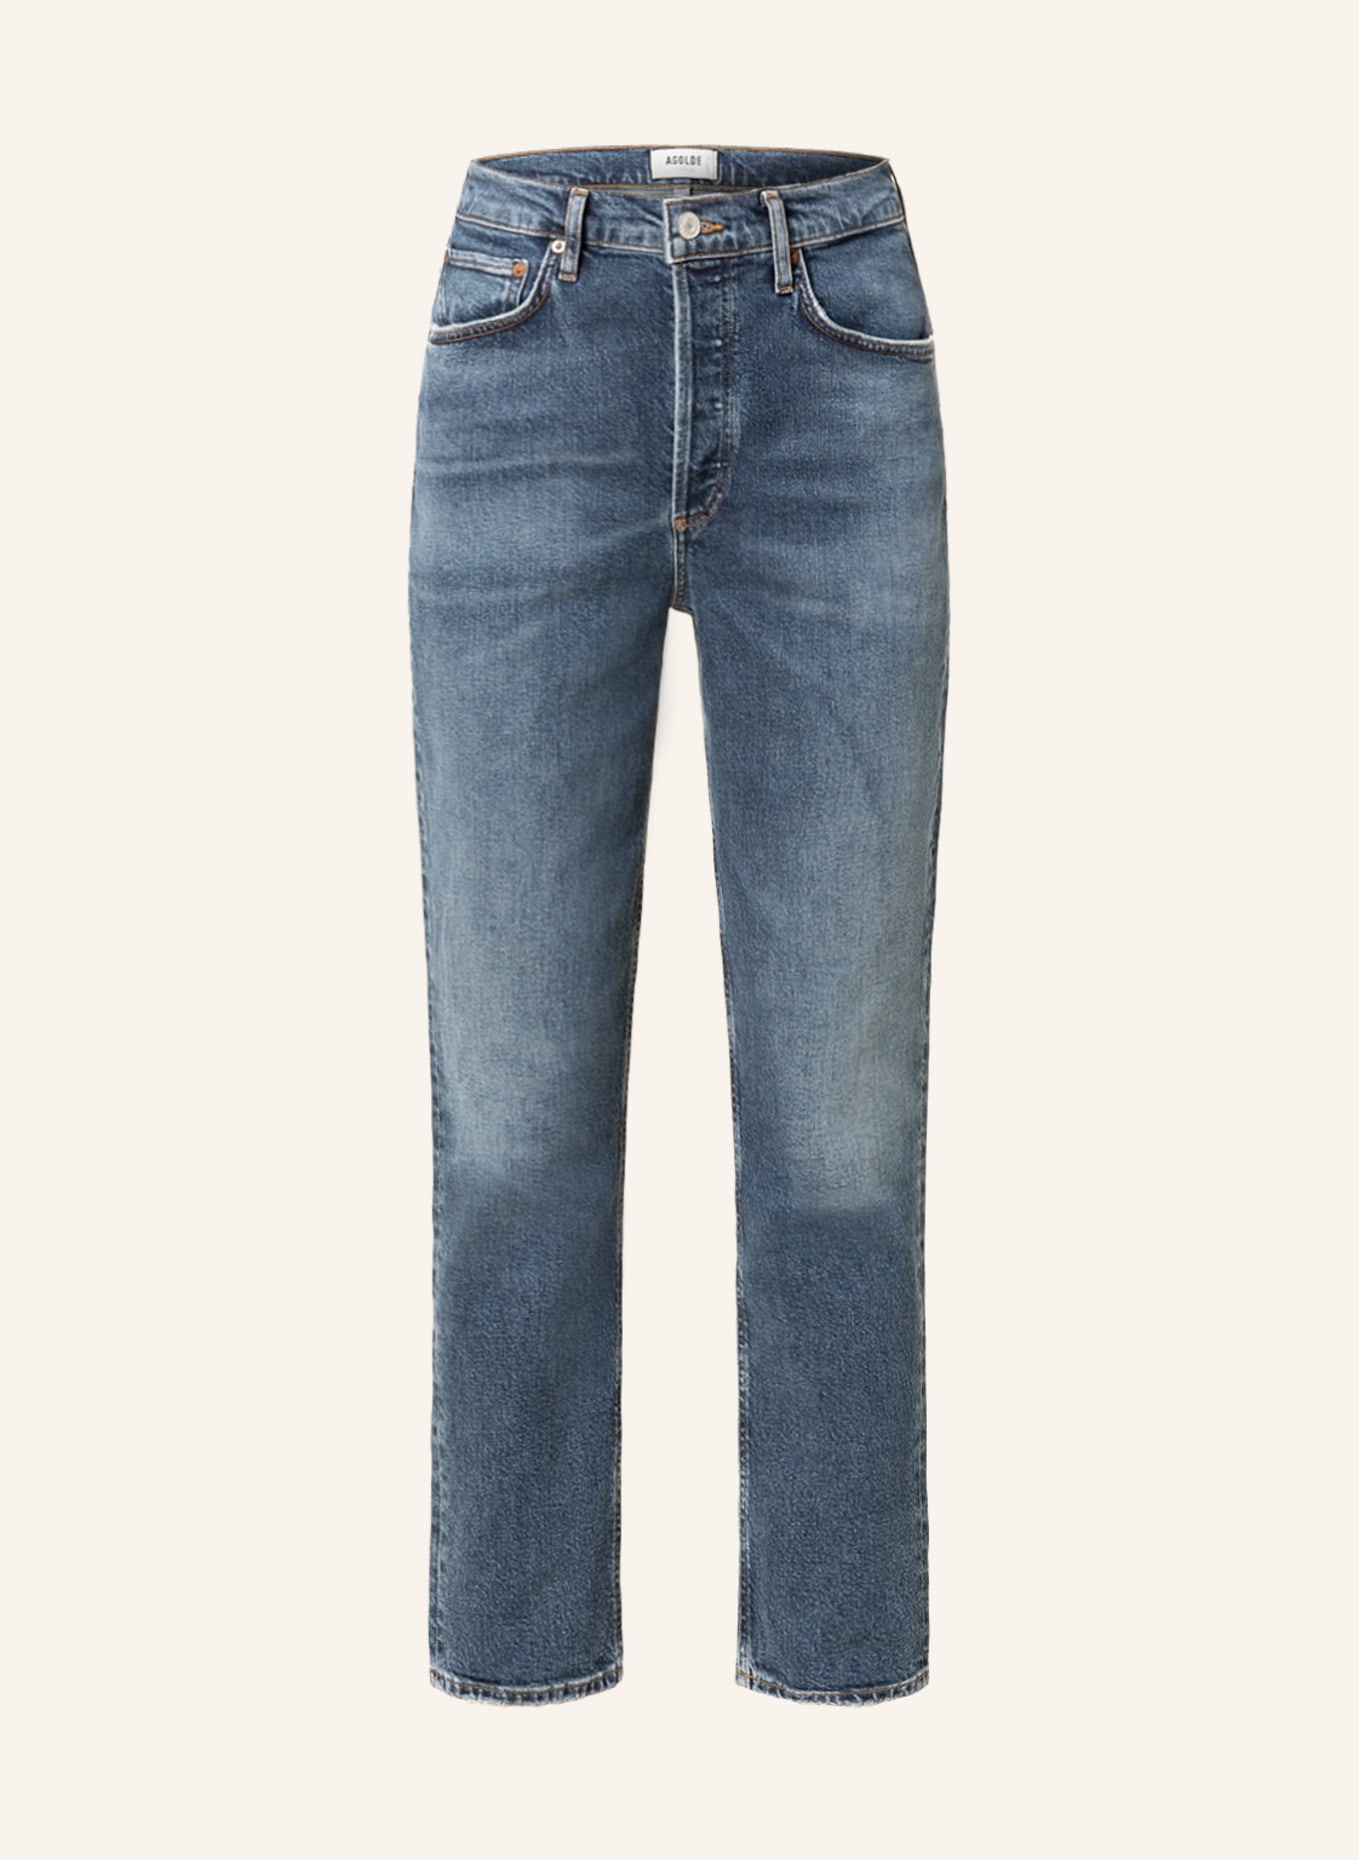 AGOLDE Straight Jeans RILEY, Farbe: Cypher dk vint indigo (Bild 1)